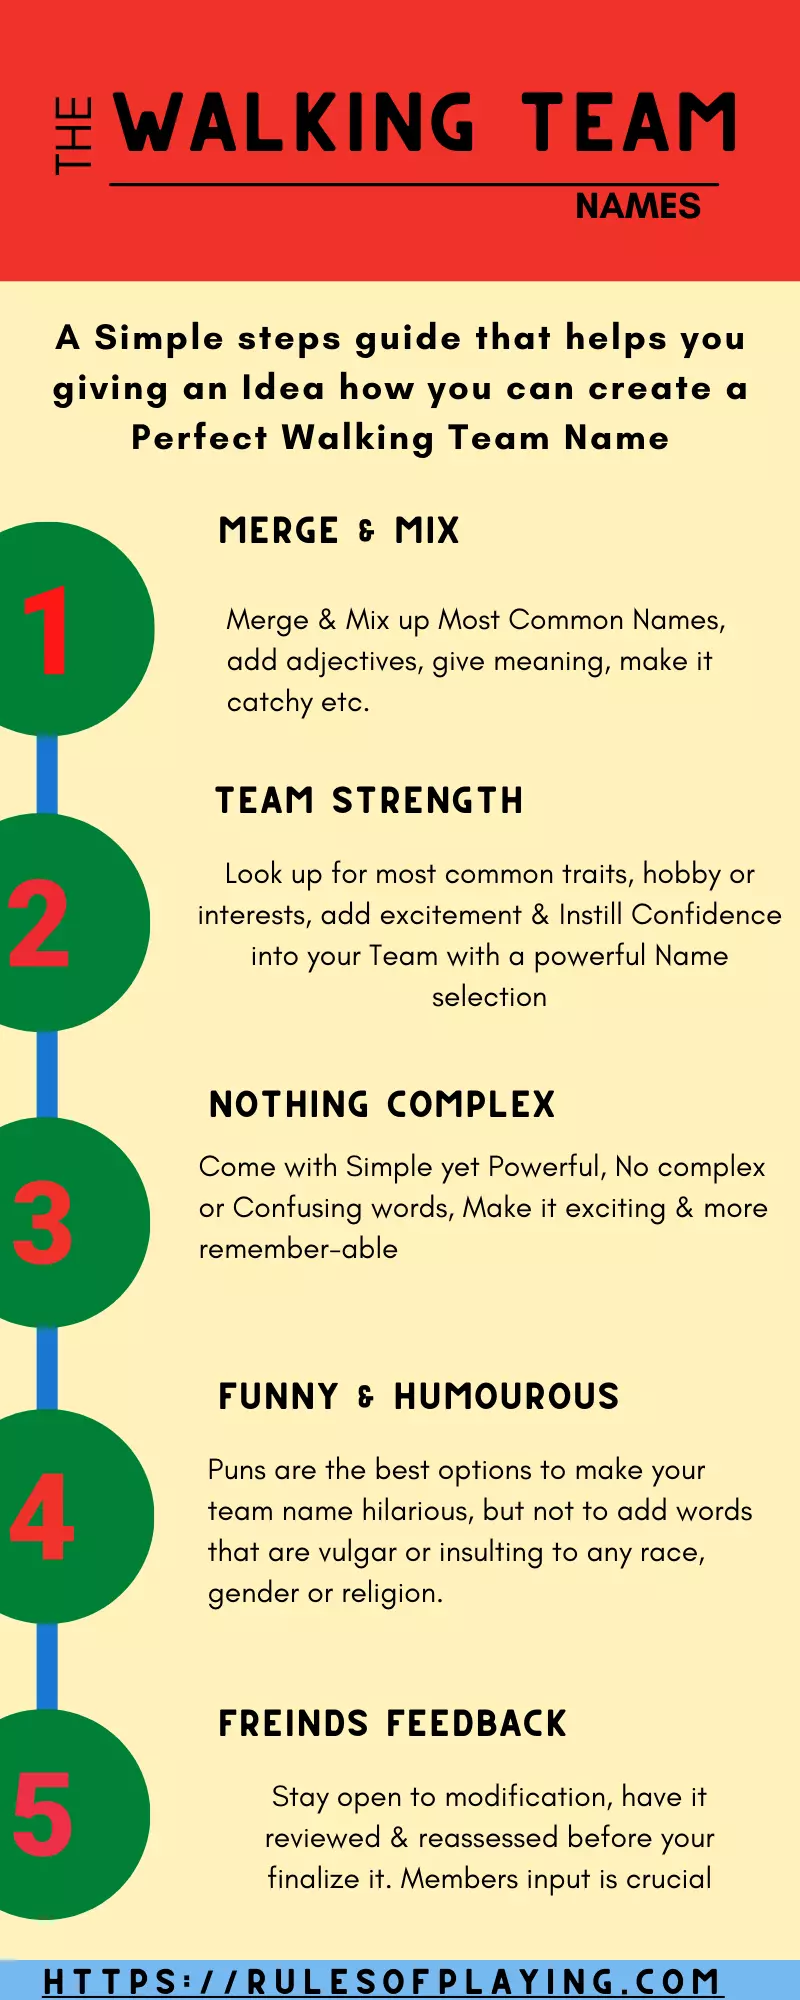 Walking team names guide